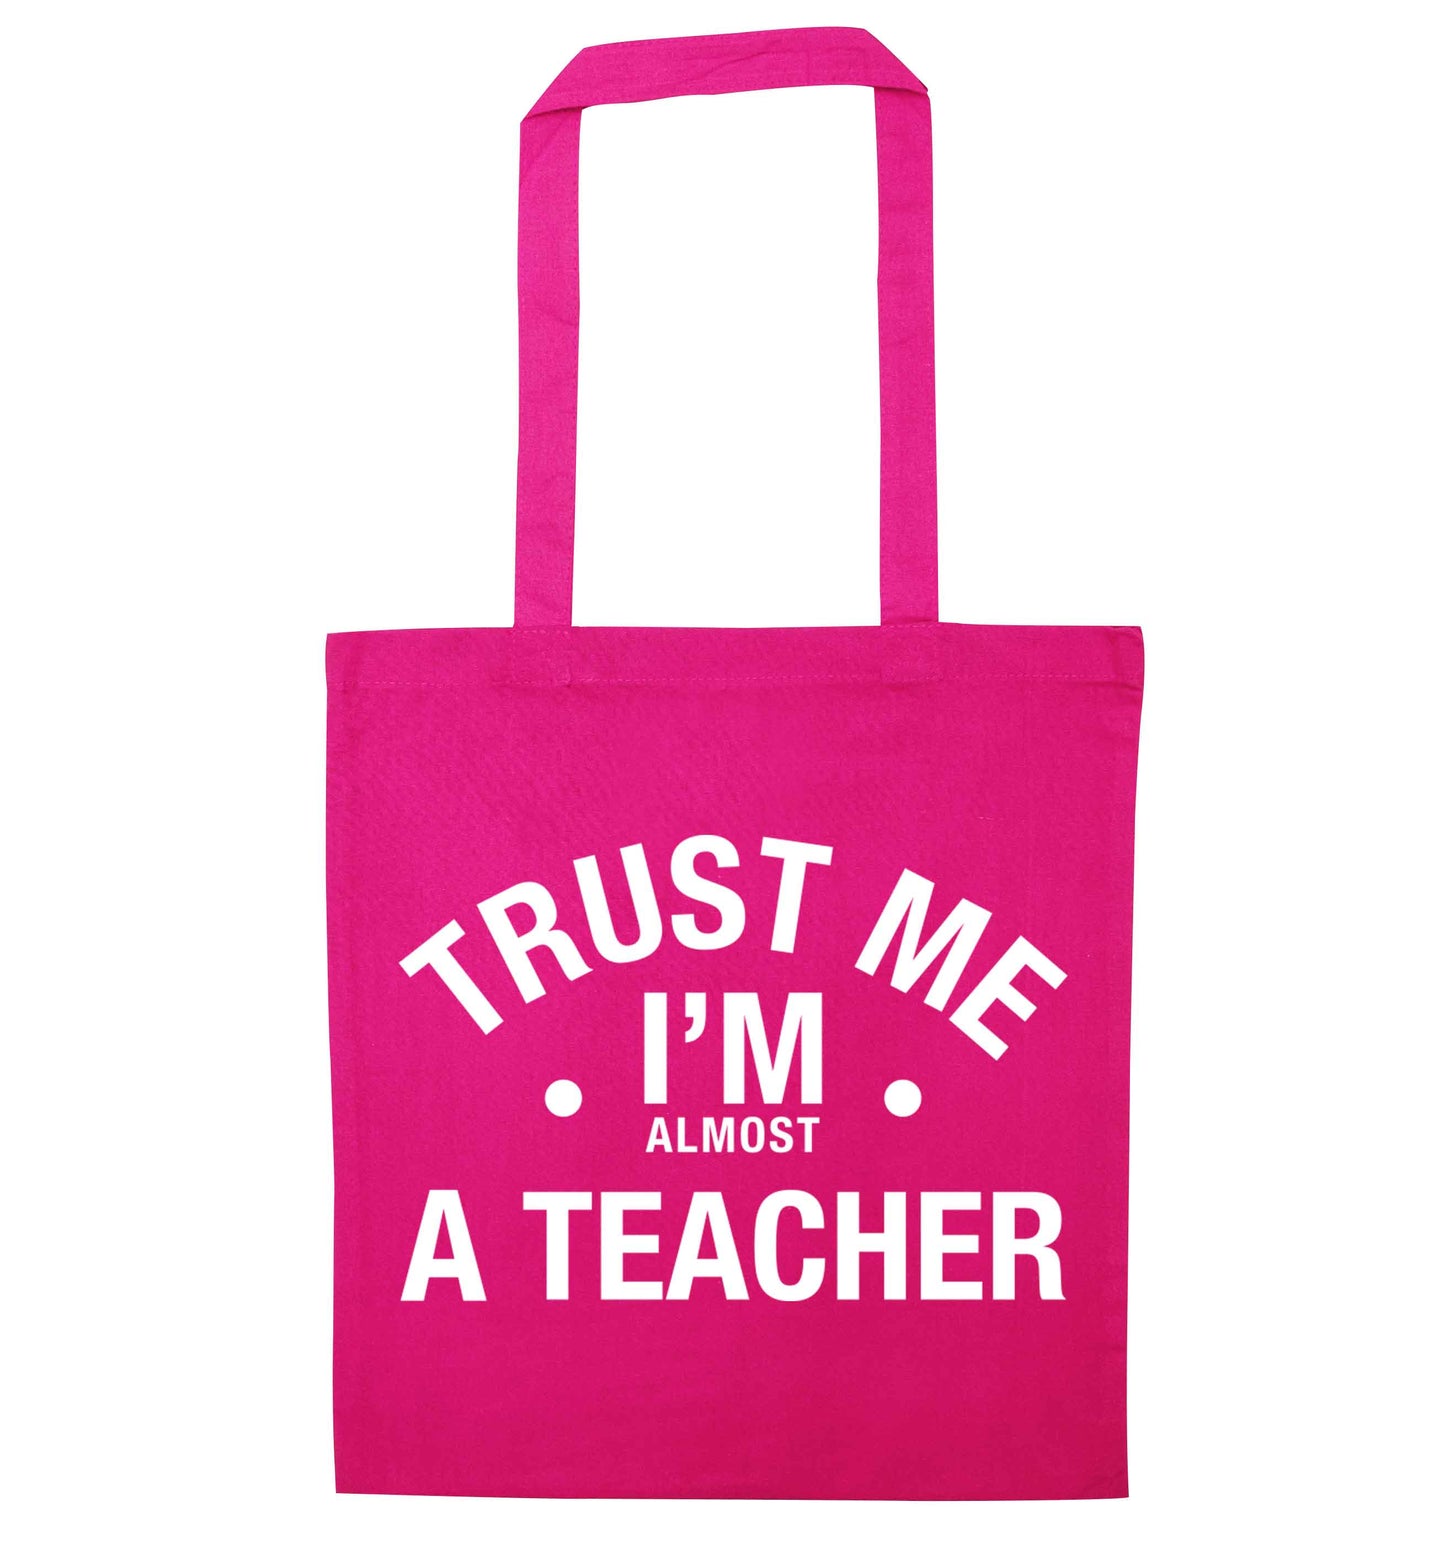 Trust me I'm almost a teacher pink tote bag